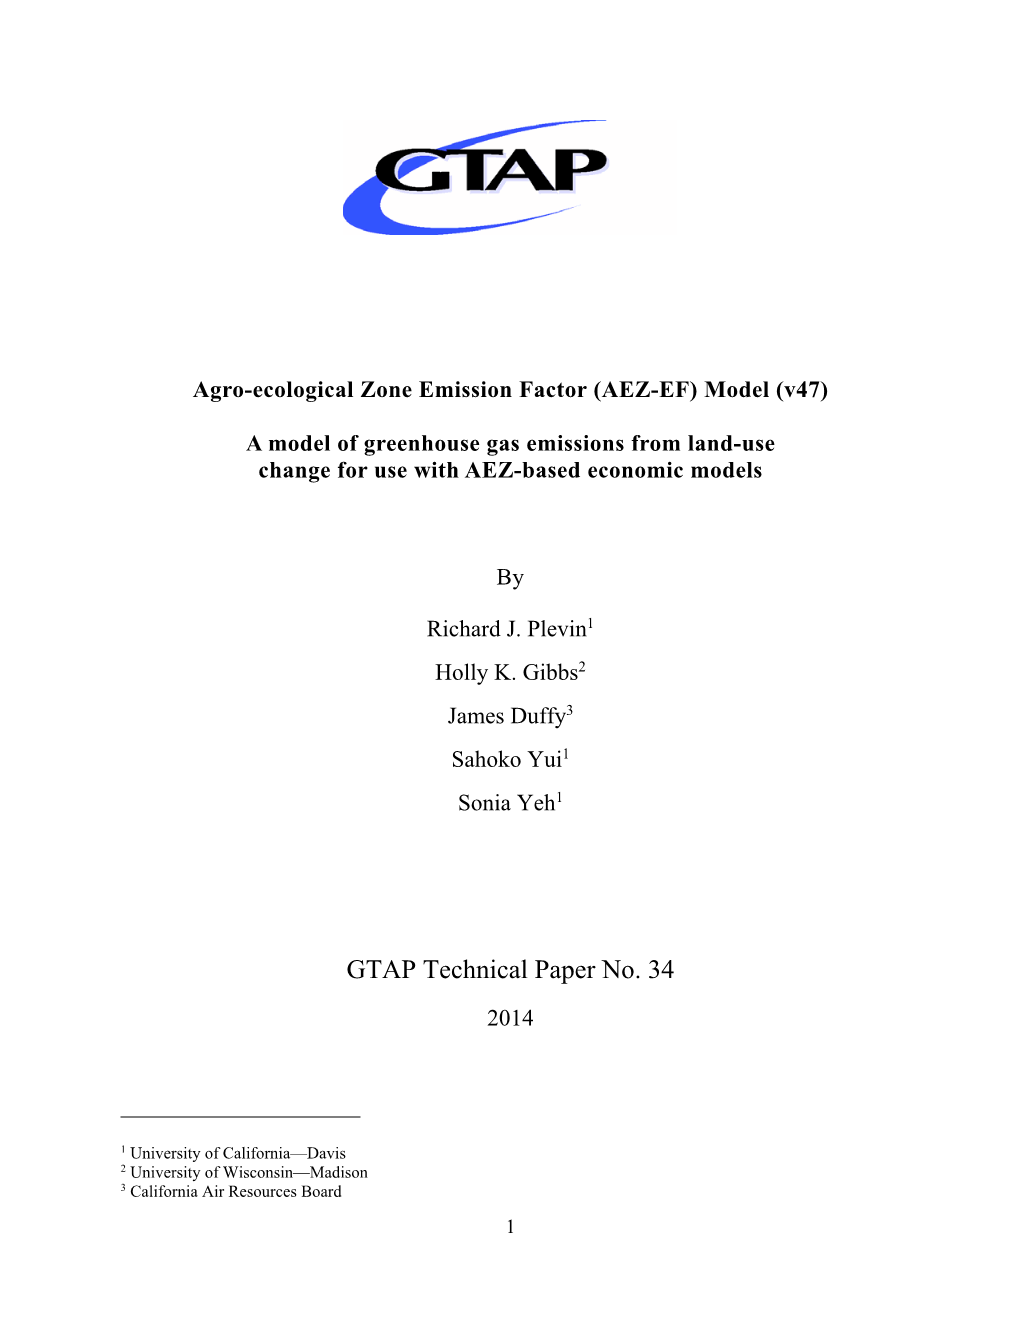 GTAP Technical Paper No. 34